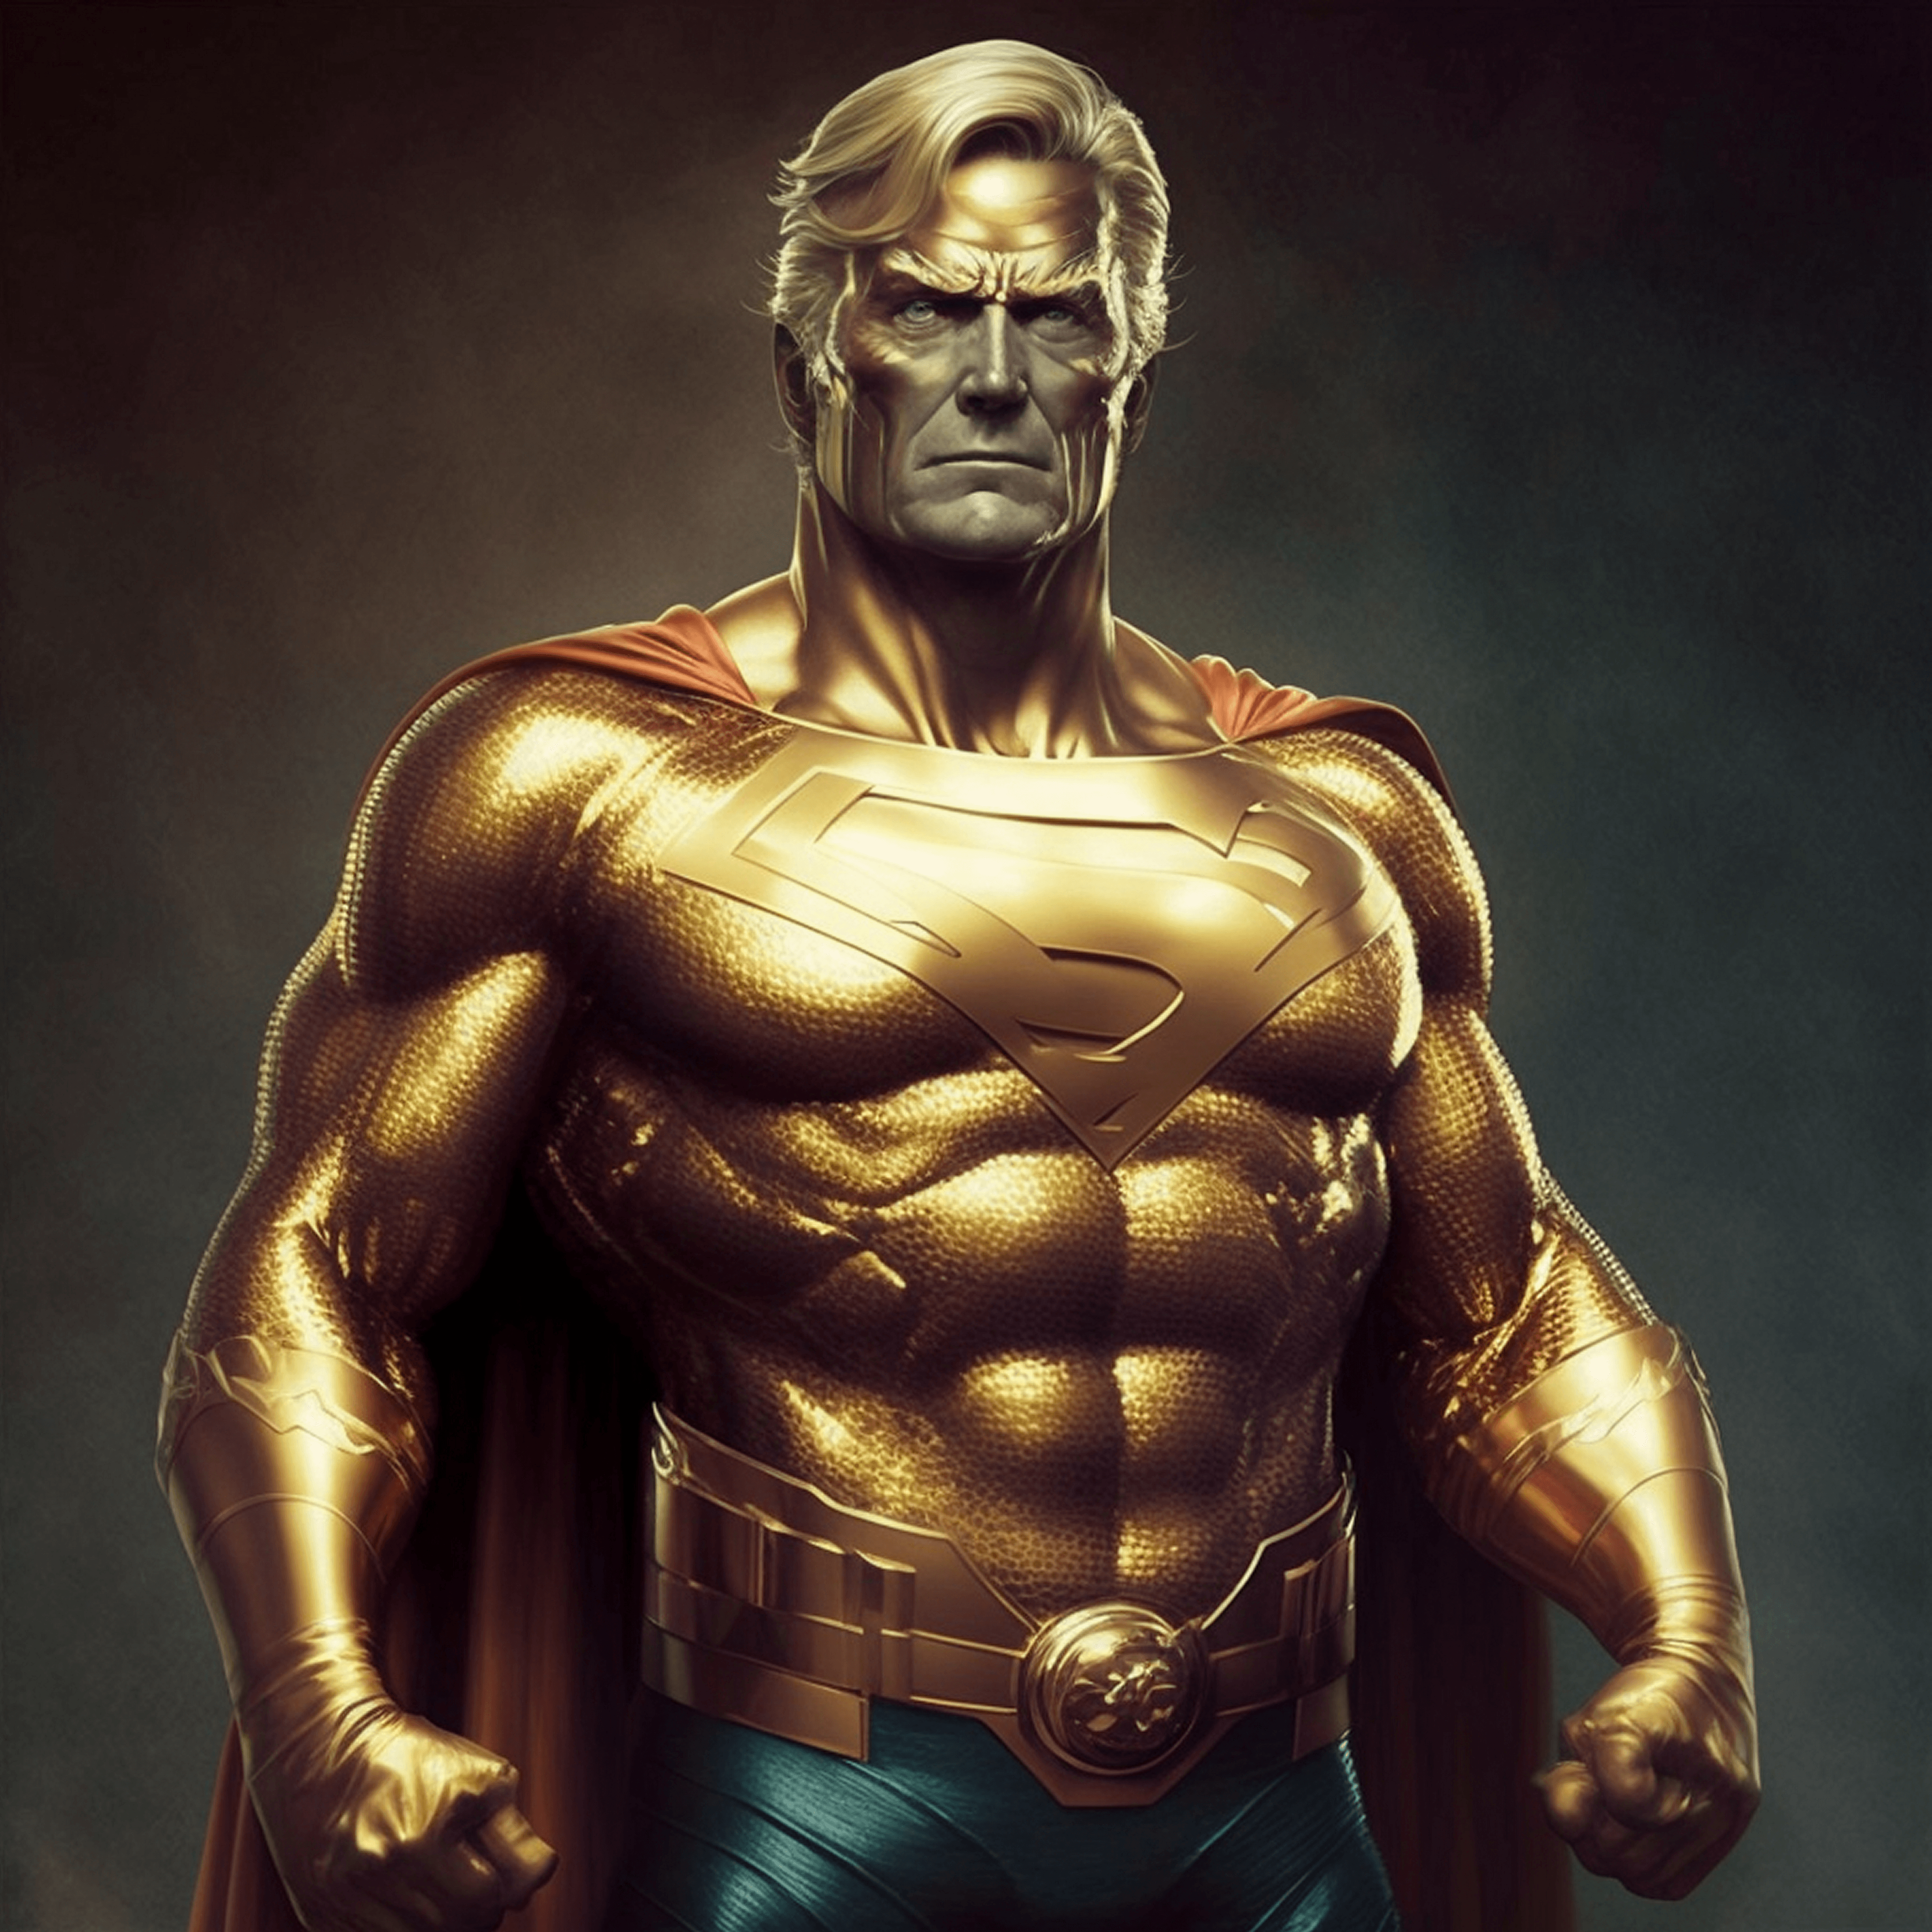 Superhero Gold No. 3 by Sollog